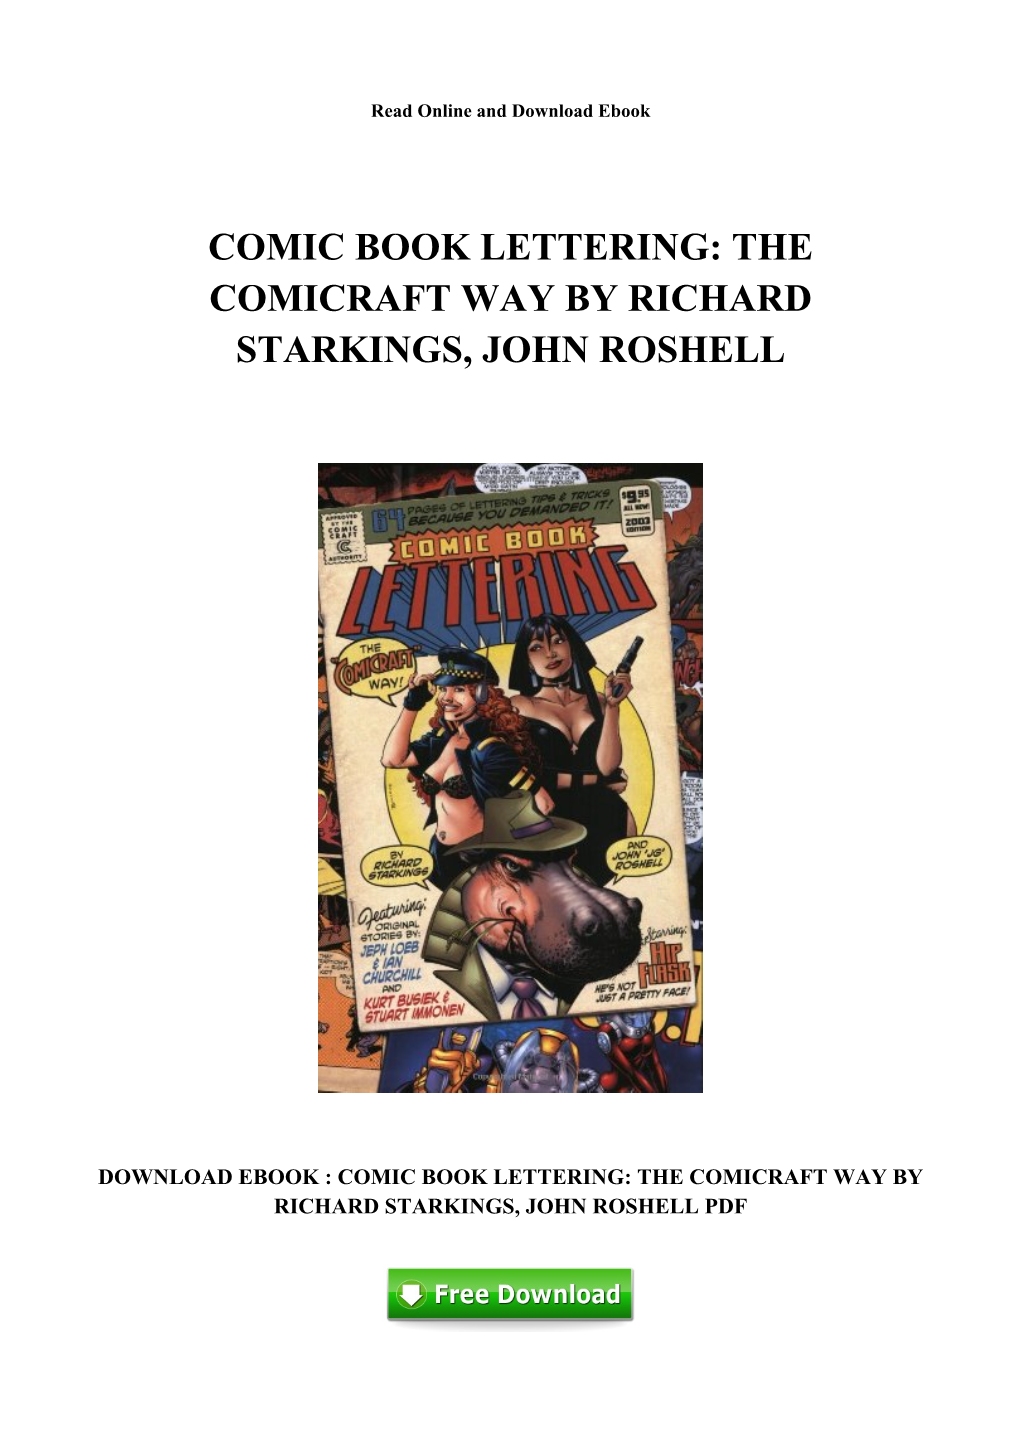 The Comicraft Way by Richard Starkings, John Roshell